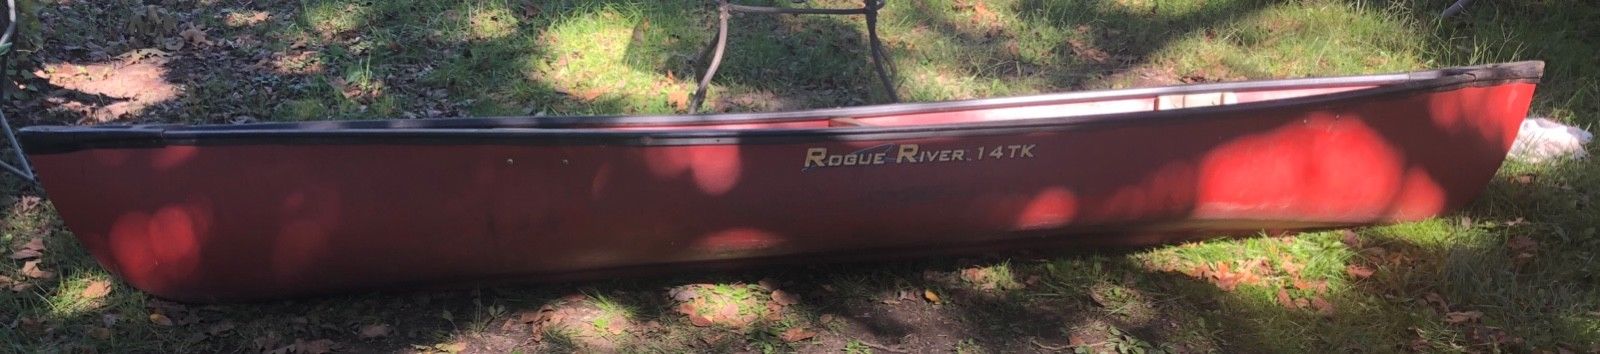 14ft Rogue River Canoe